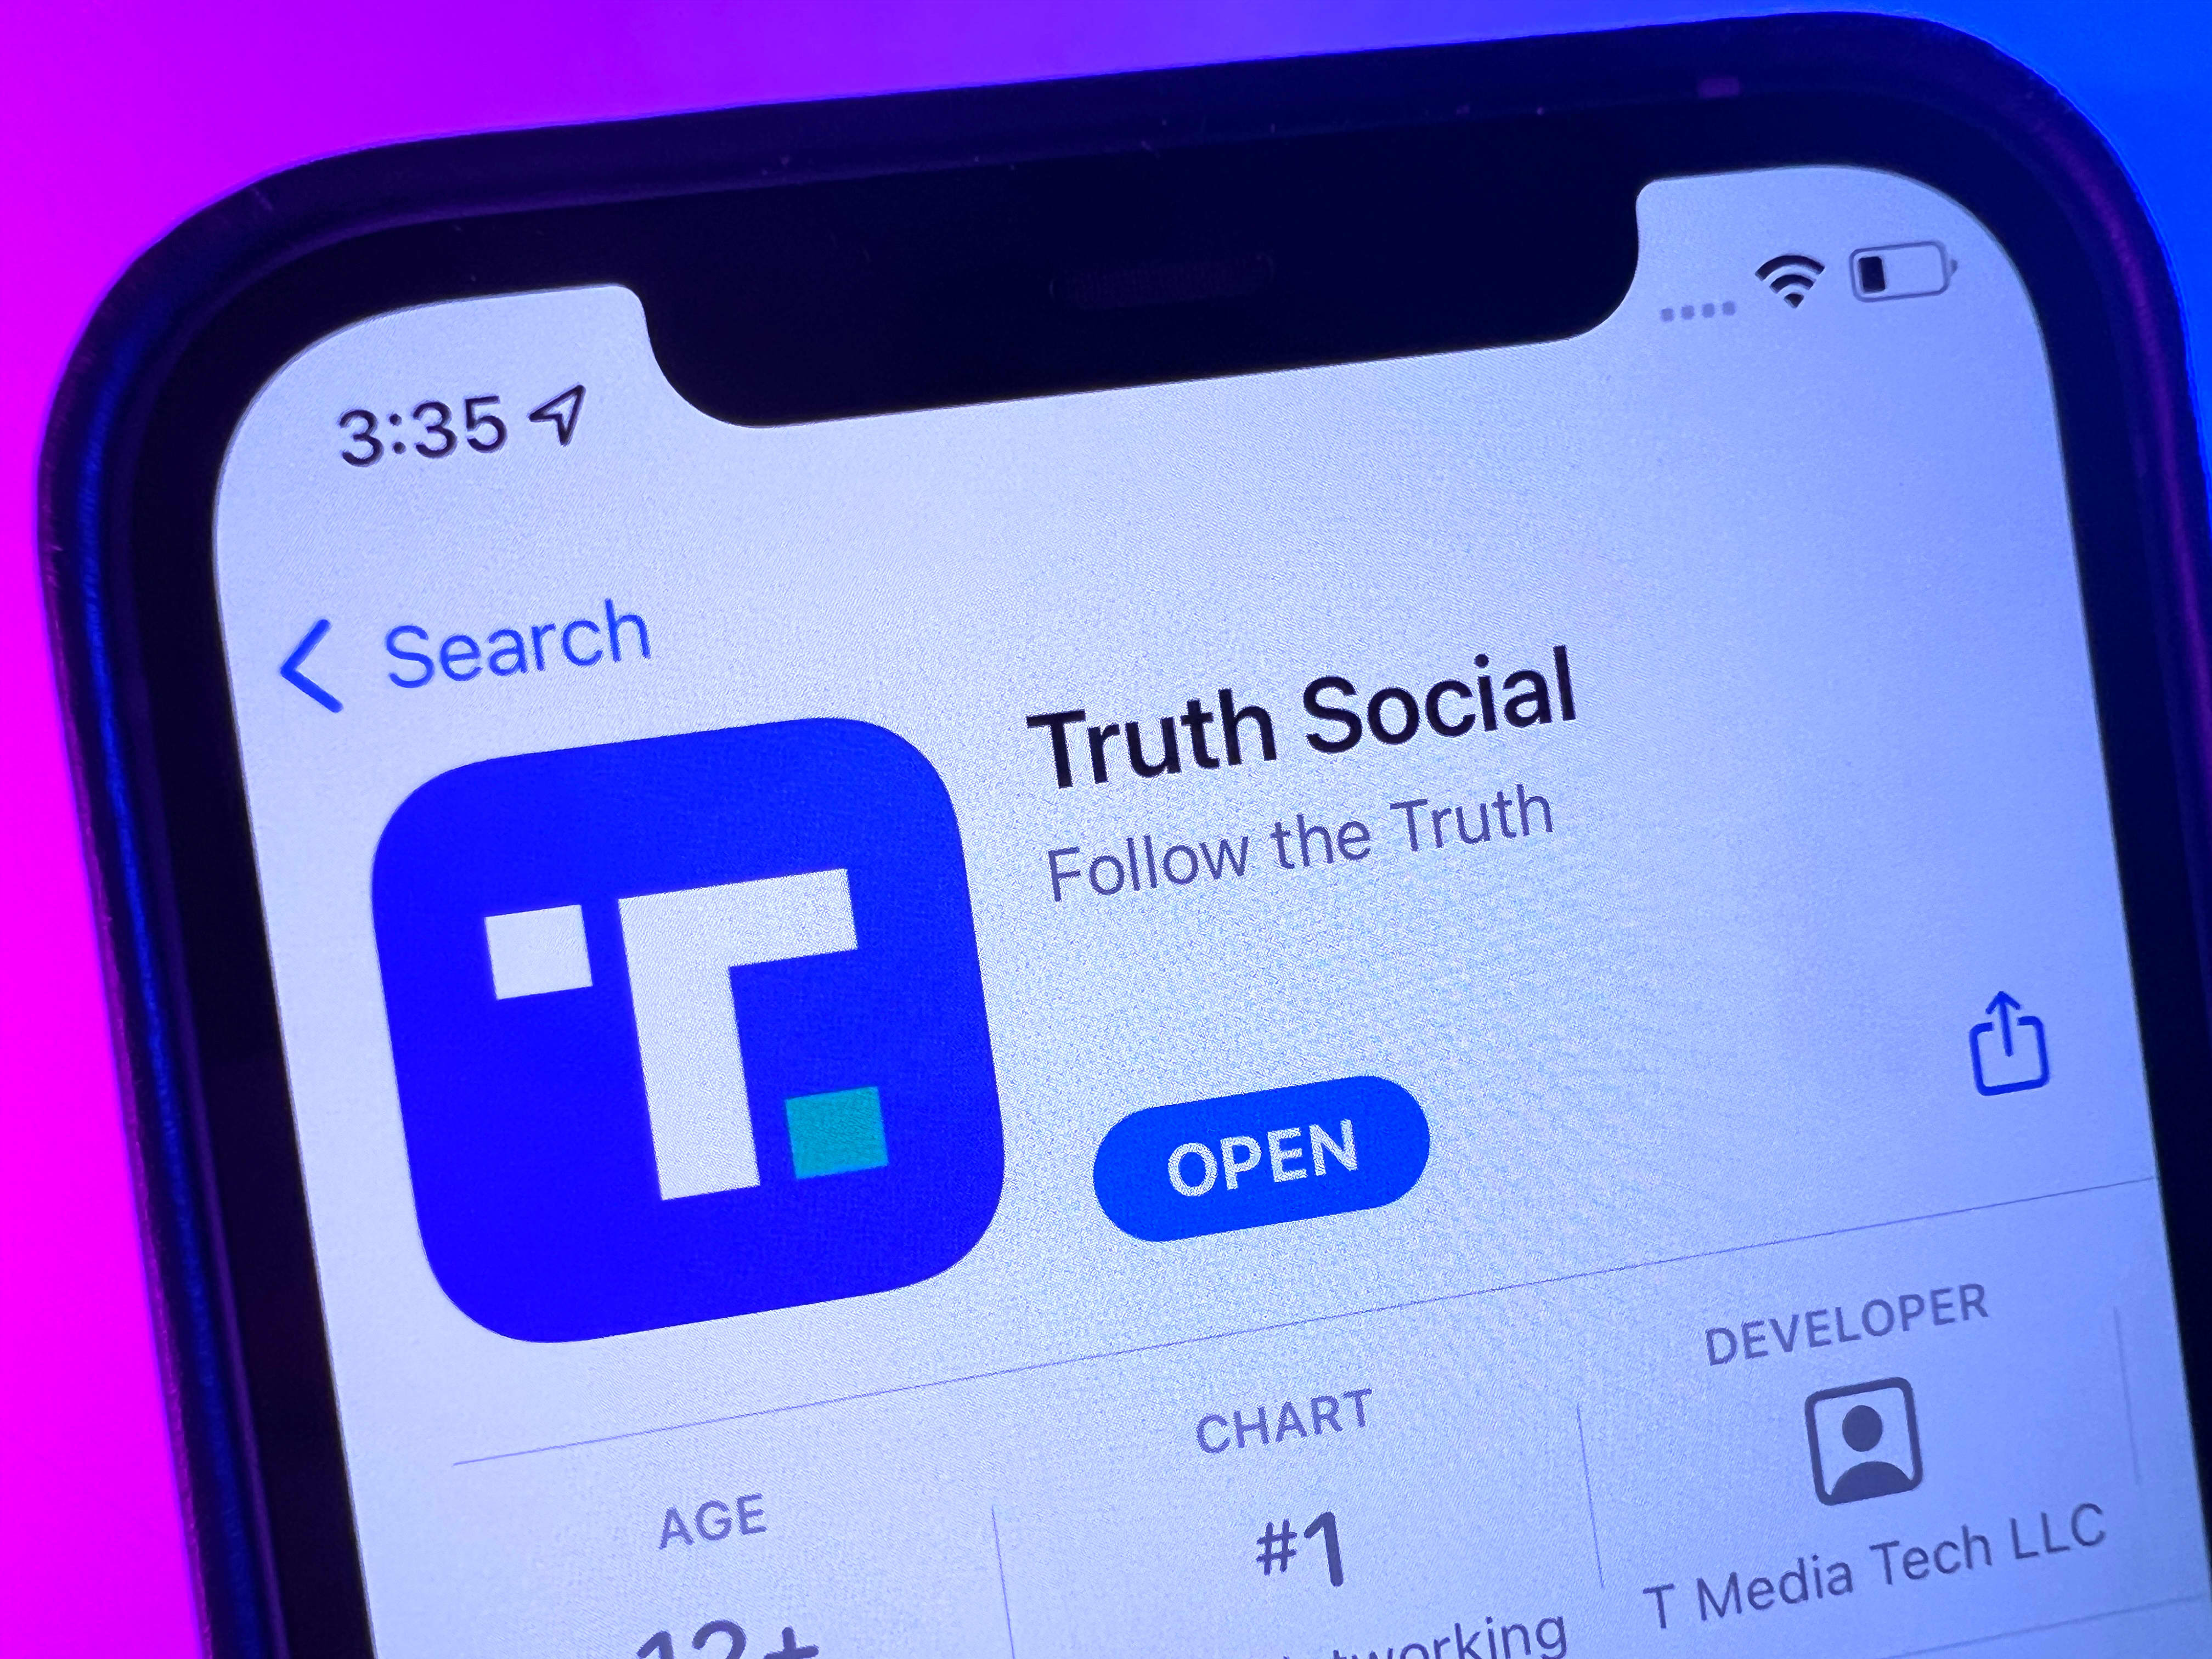 Gavin Newsom made his first post on Truth social